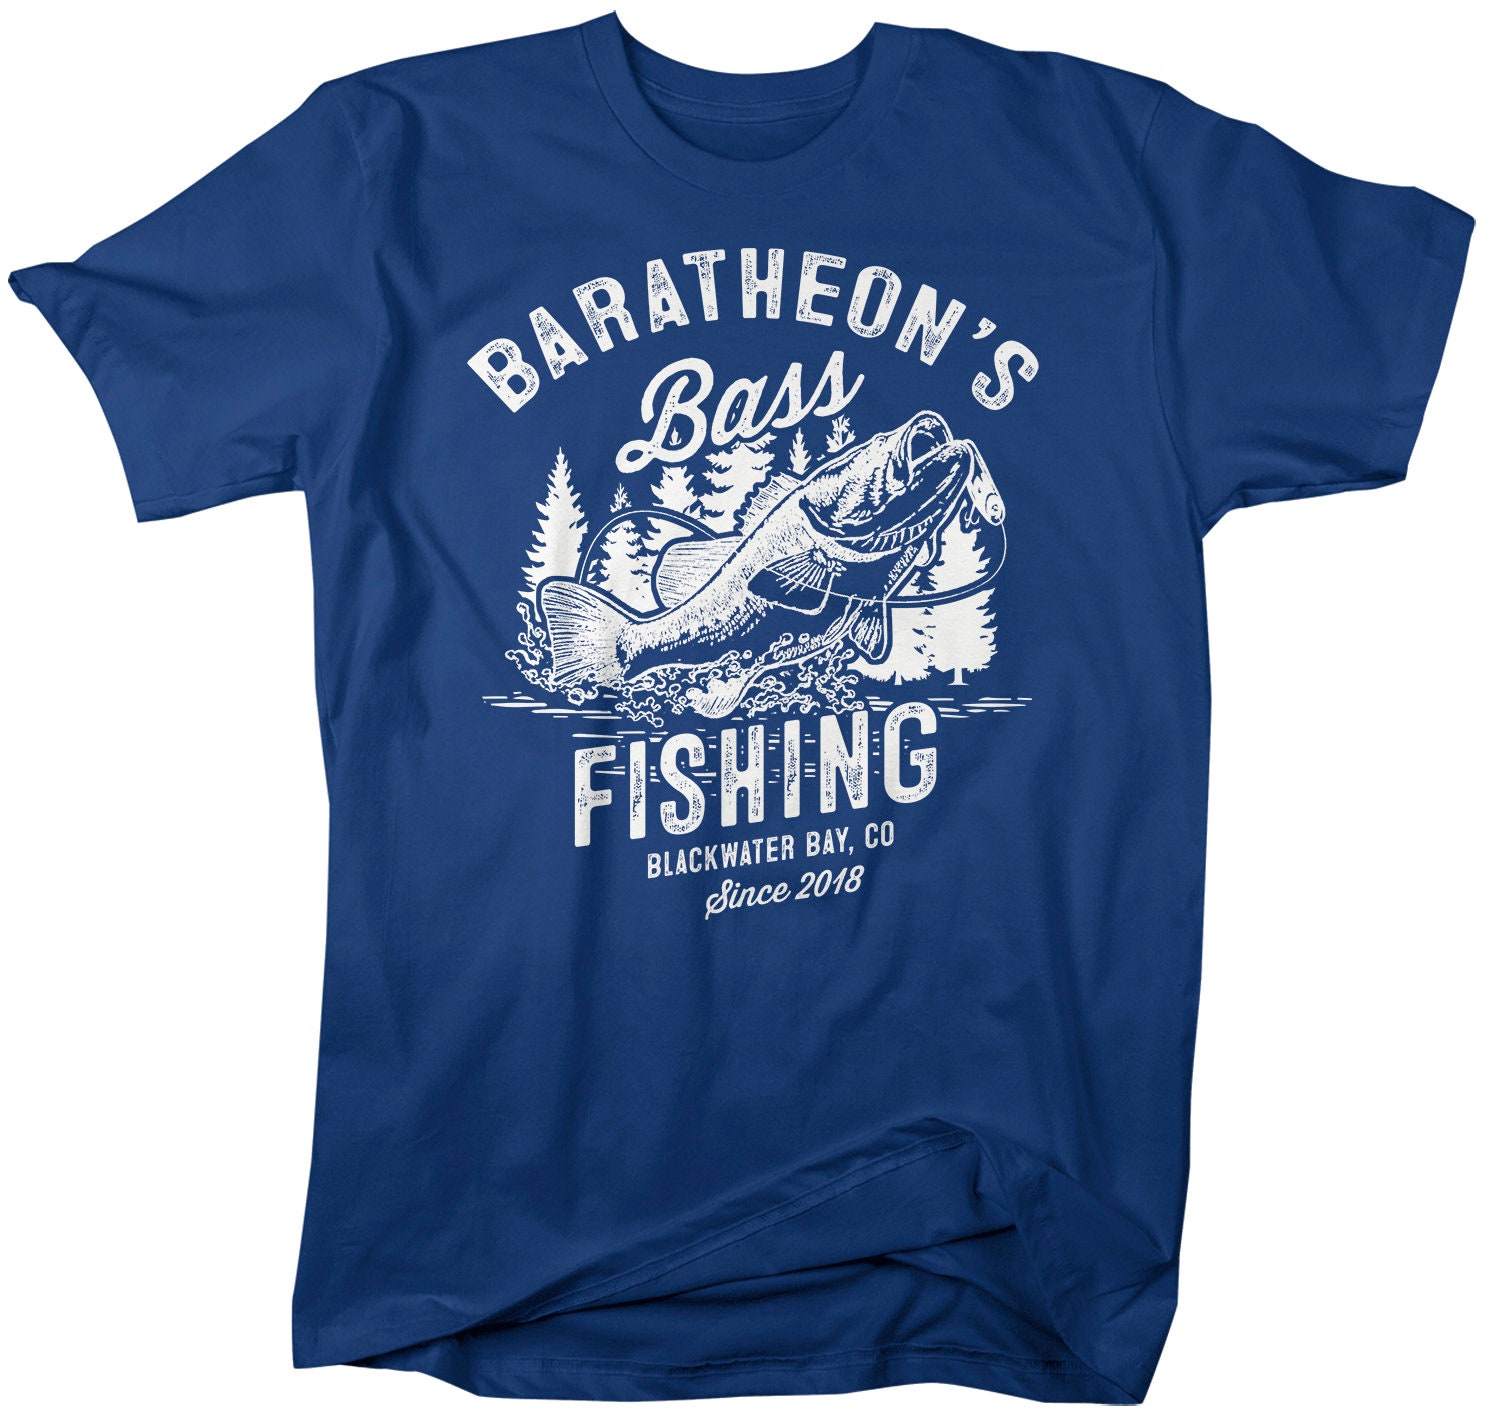 Men's Personalized Fishing T-Shirt Fisherman Bass Fishing Shirt Vintage Shirt Tee Shirt Men's Gift Custom Shirts